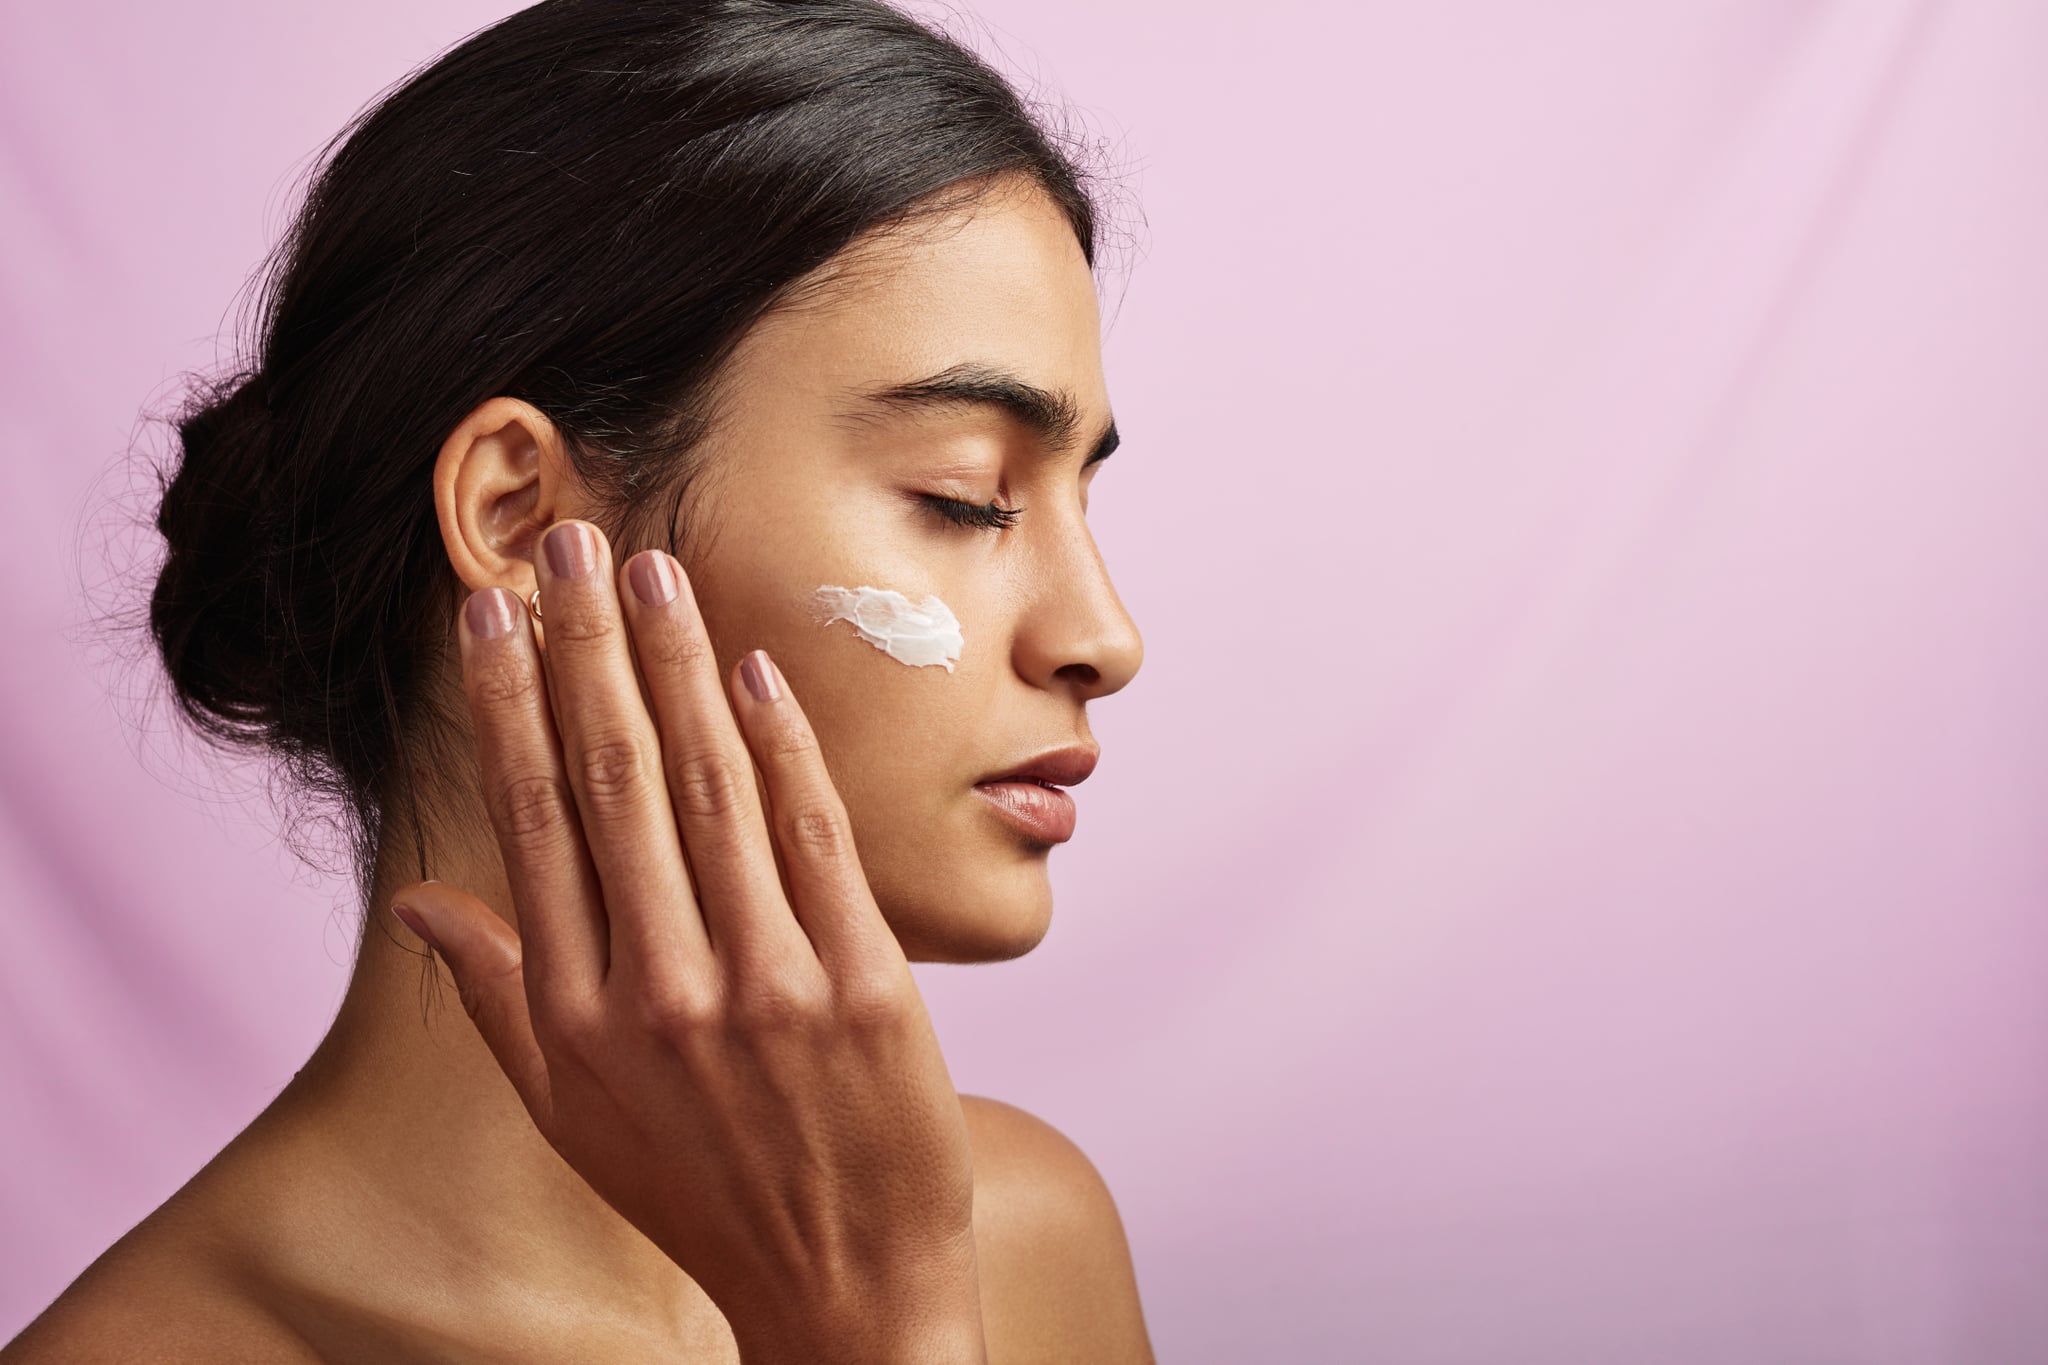 Studio shot of a beautiful young woman applying moisturiser to her face